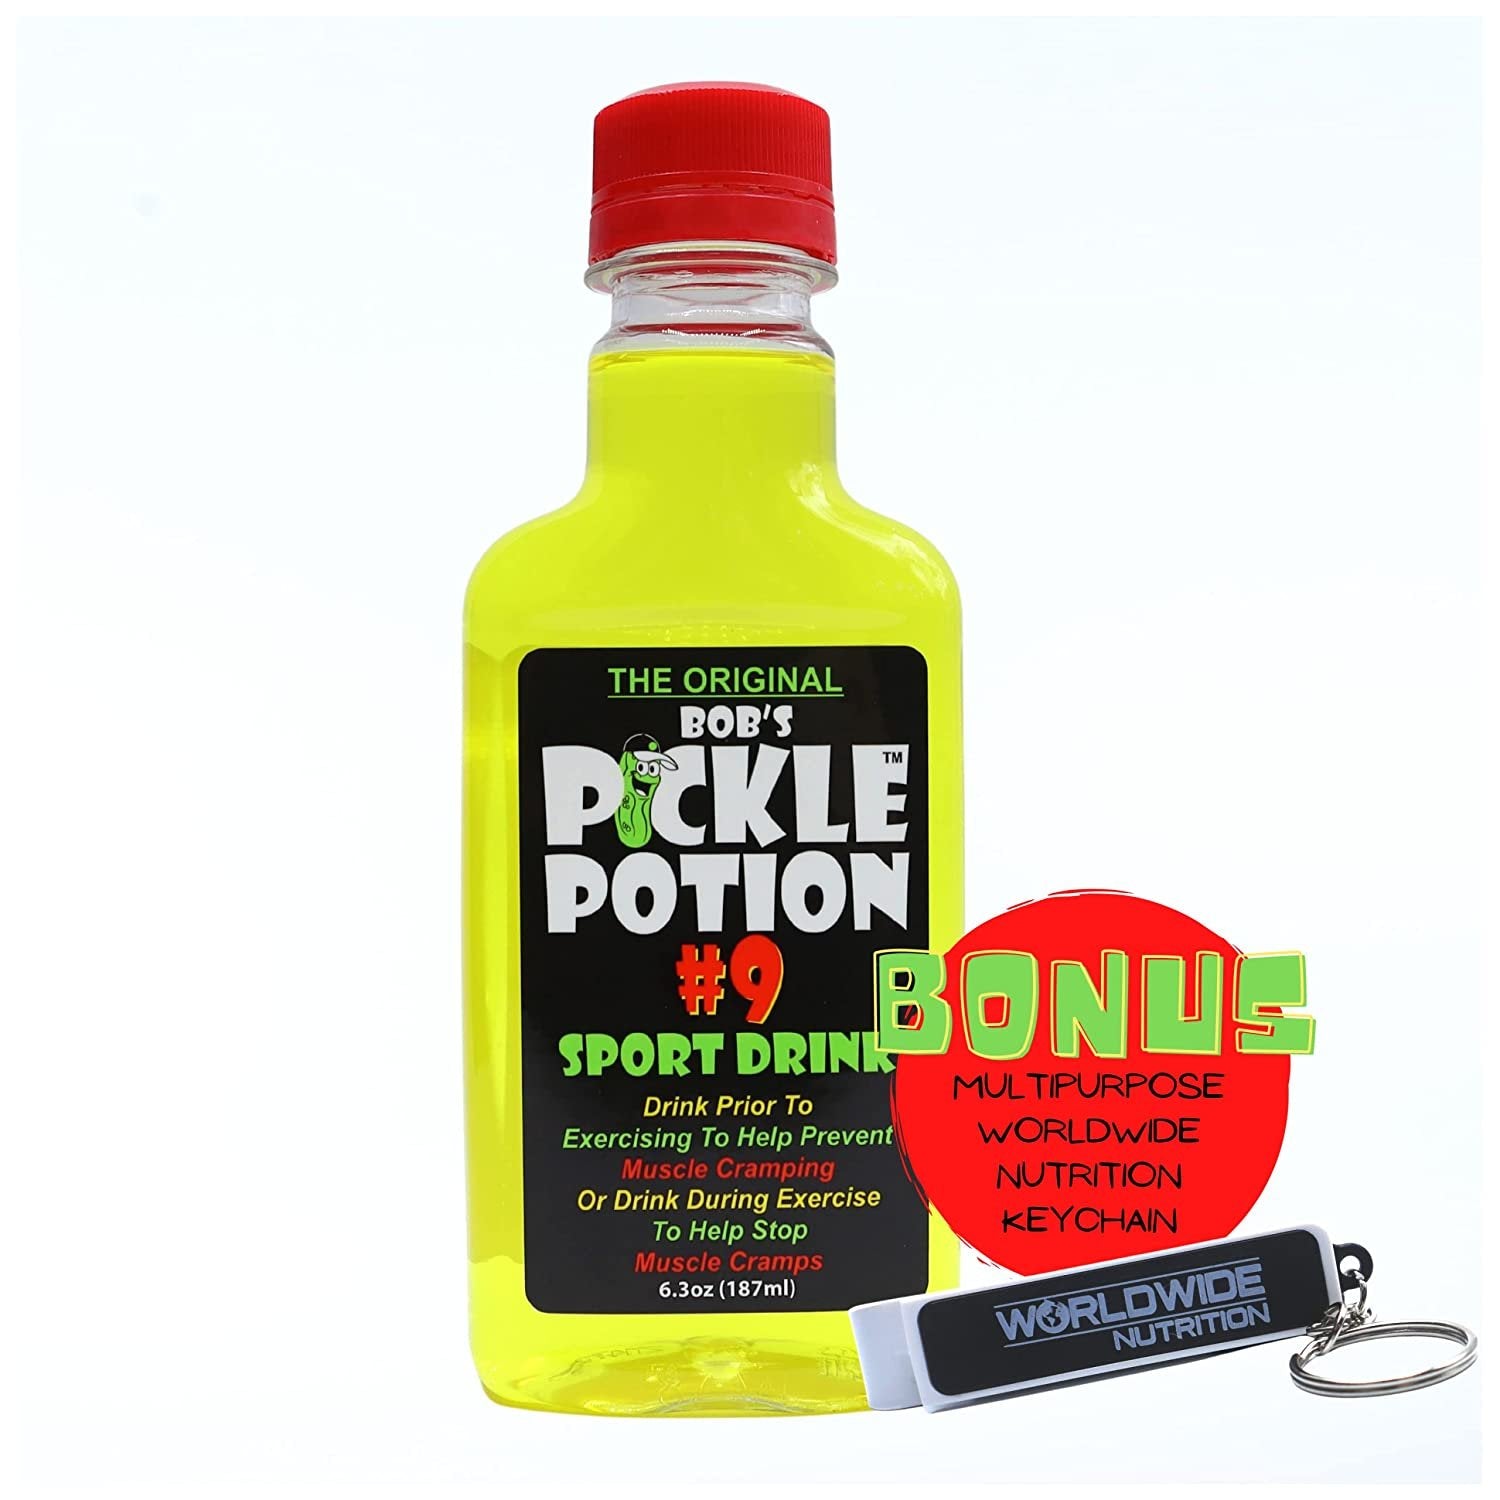 Bob's Pickle Potion 9 Sports Drinks - Electrolyte Drink for Pre Workou